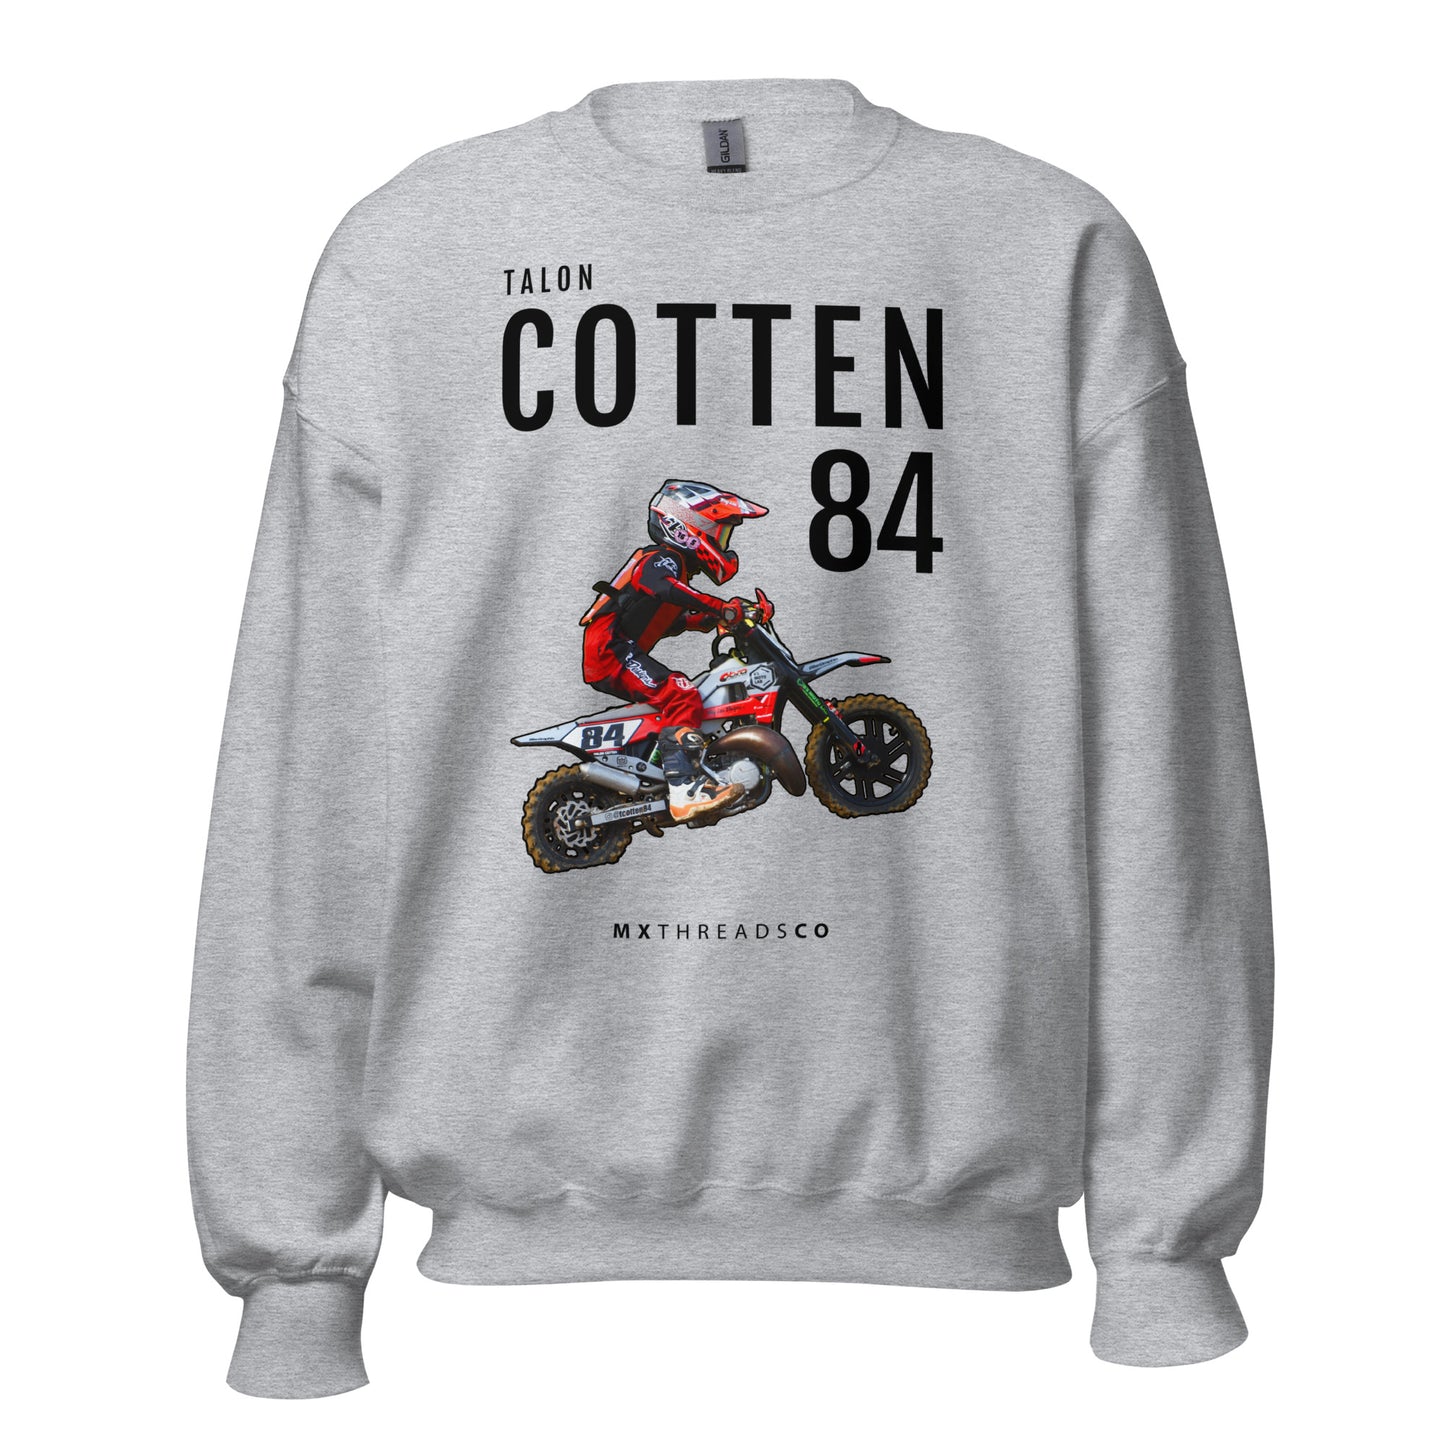 Talon Cotten Photo-Graphic Series Sweatshirt